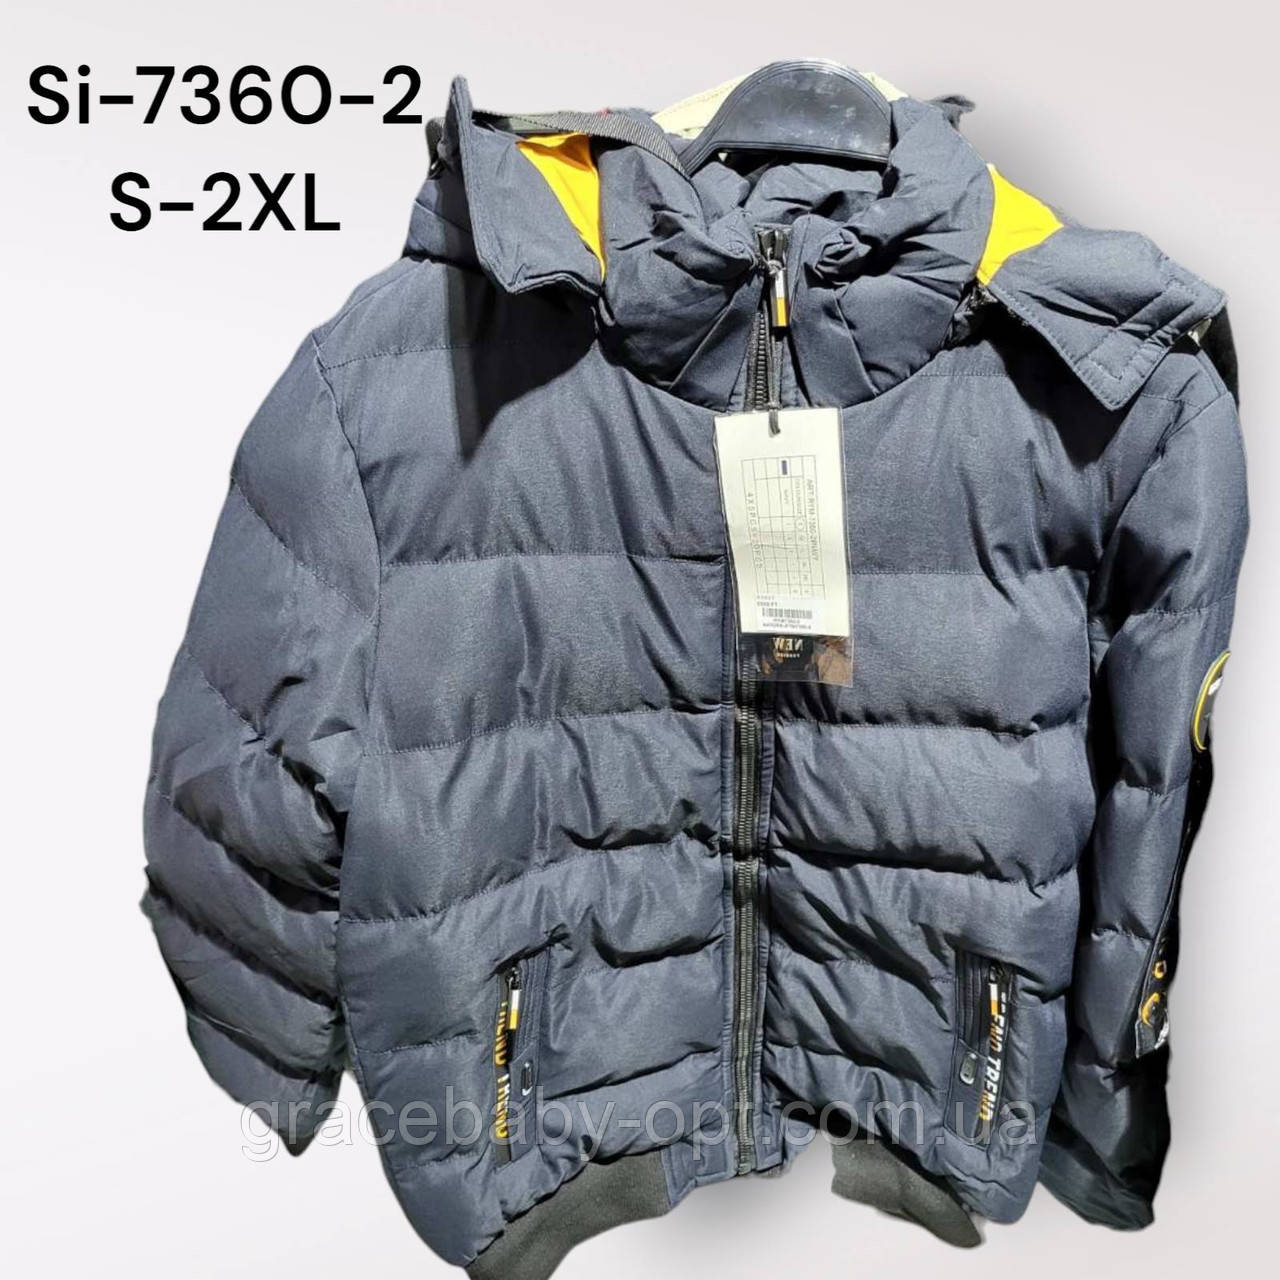 Куртка утеплена чоловіча оптом, S-2XL рр, No Si-7360-2